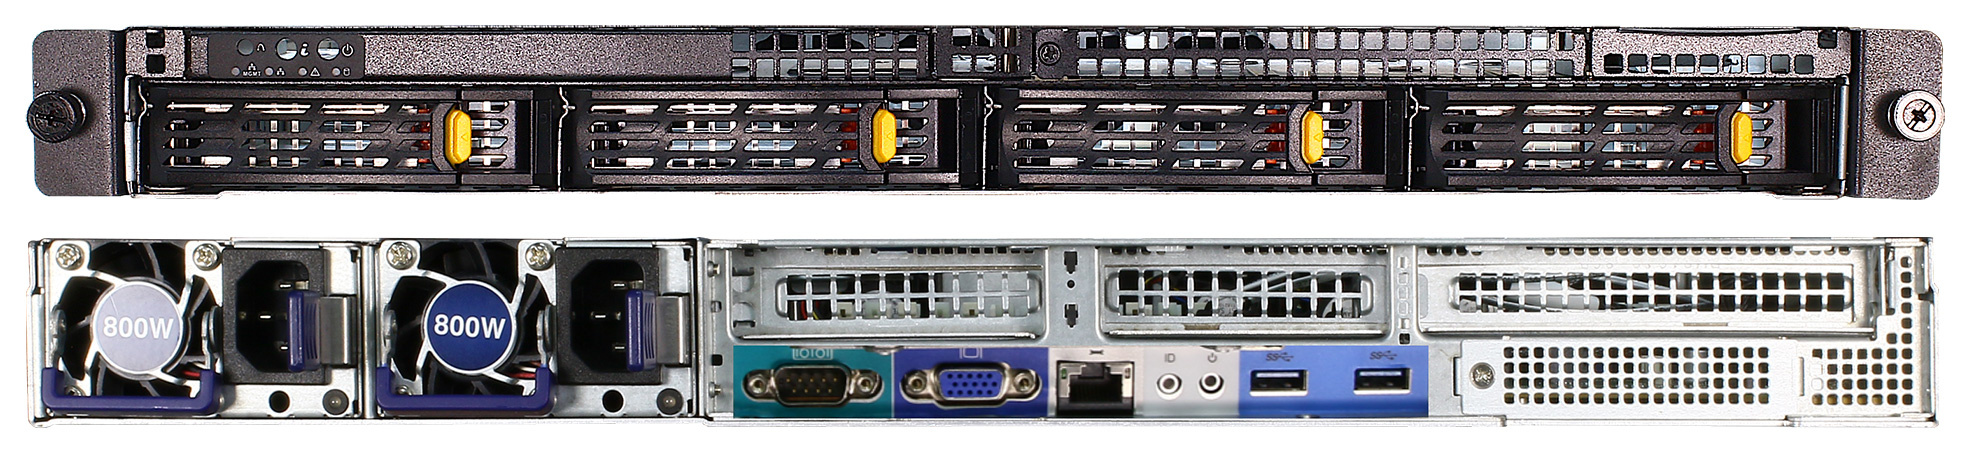 Сервер iRU Rock C1204P, 1xIntel Xeon Gold 6126 (up2), 4x32Gb RAM, 1x500Gb SATA SSD, 4x2.5/3.5